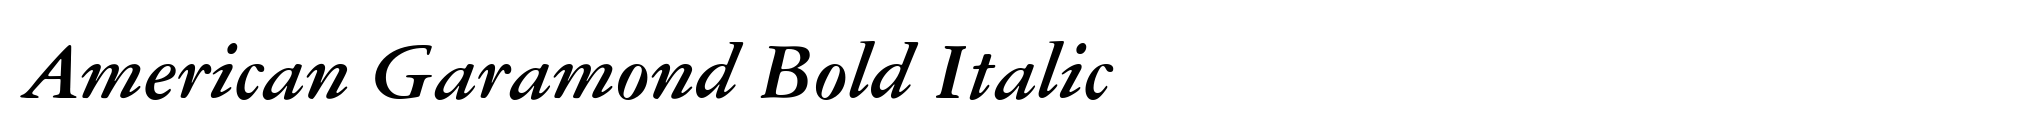 American Garamond Bold Italic image